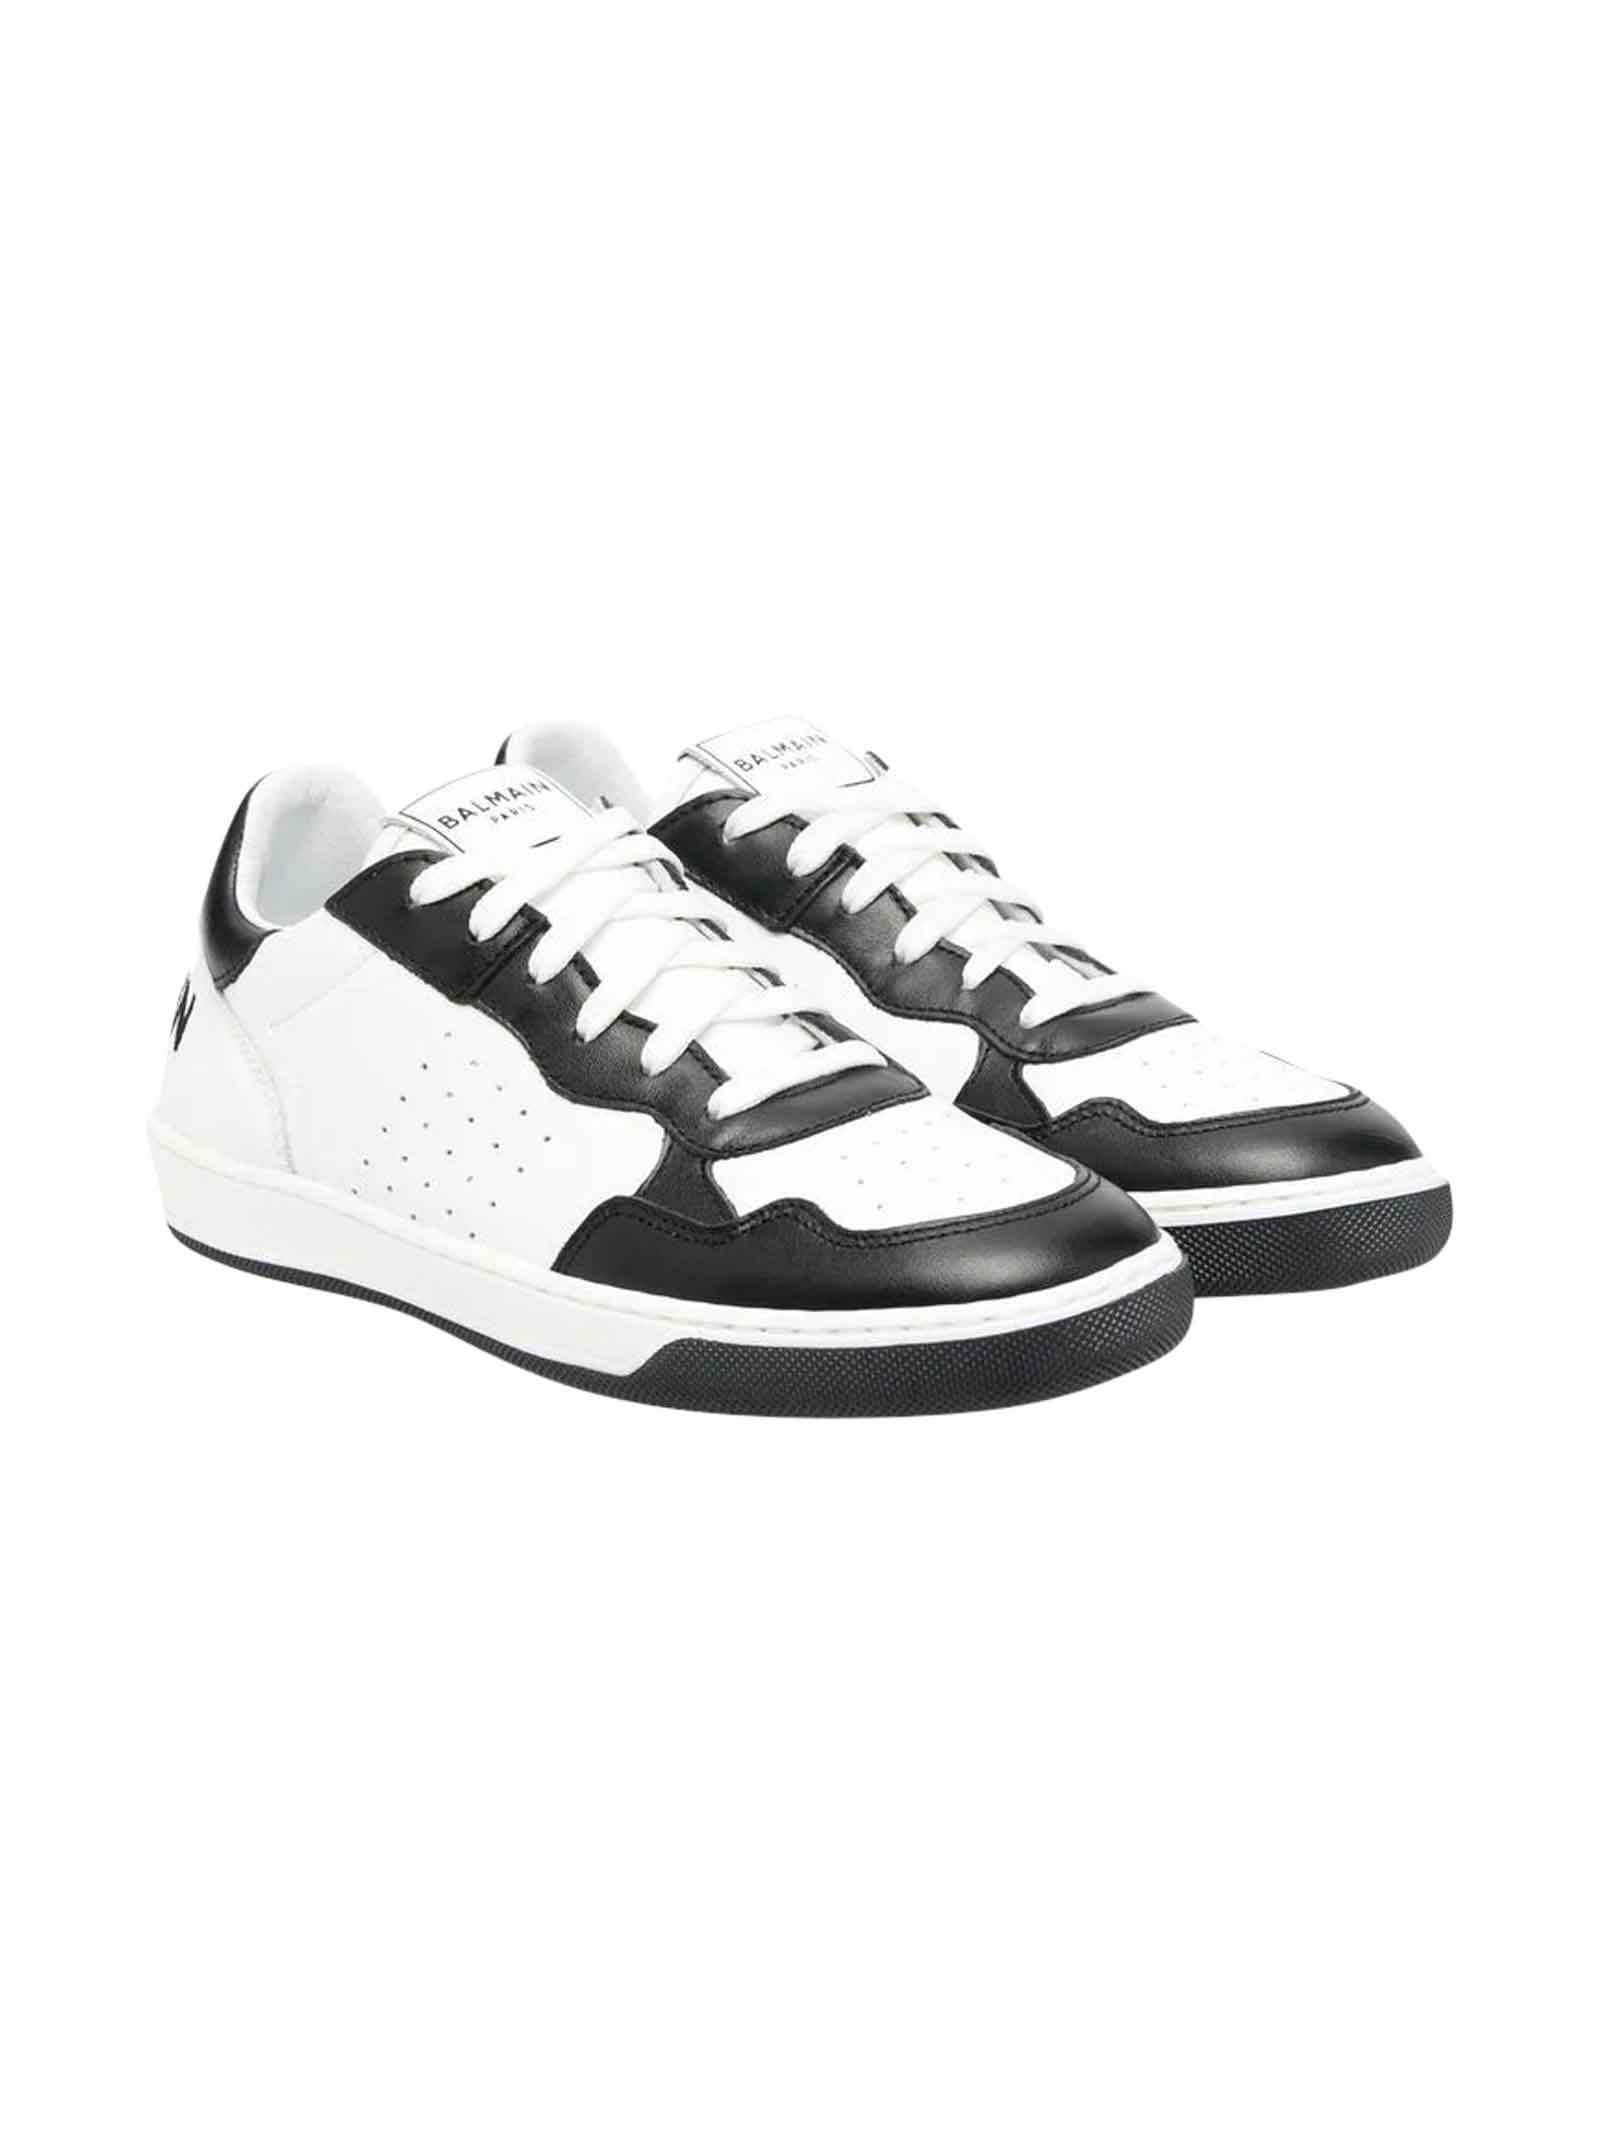 Balmain White / Black Shoes Teen Unisex